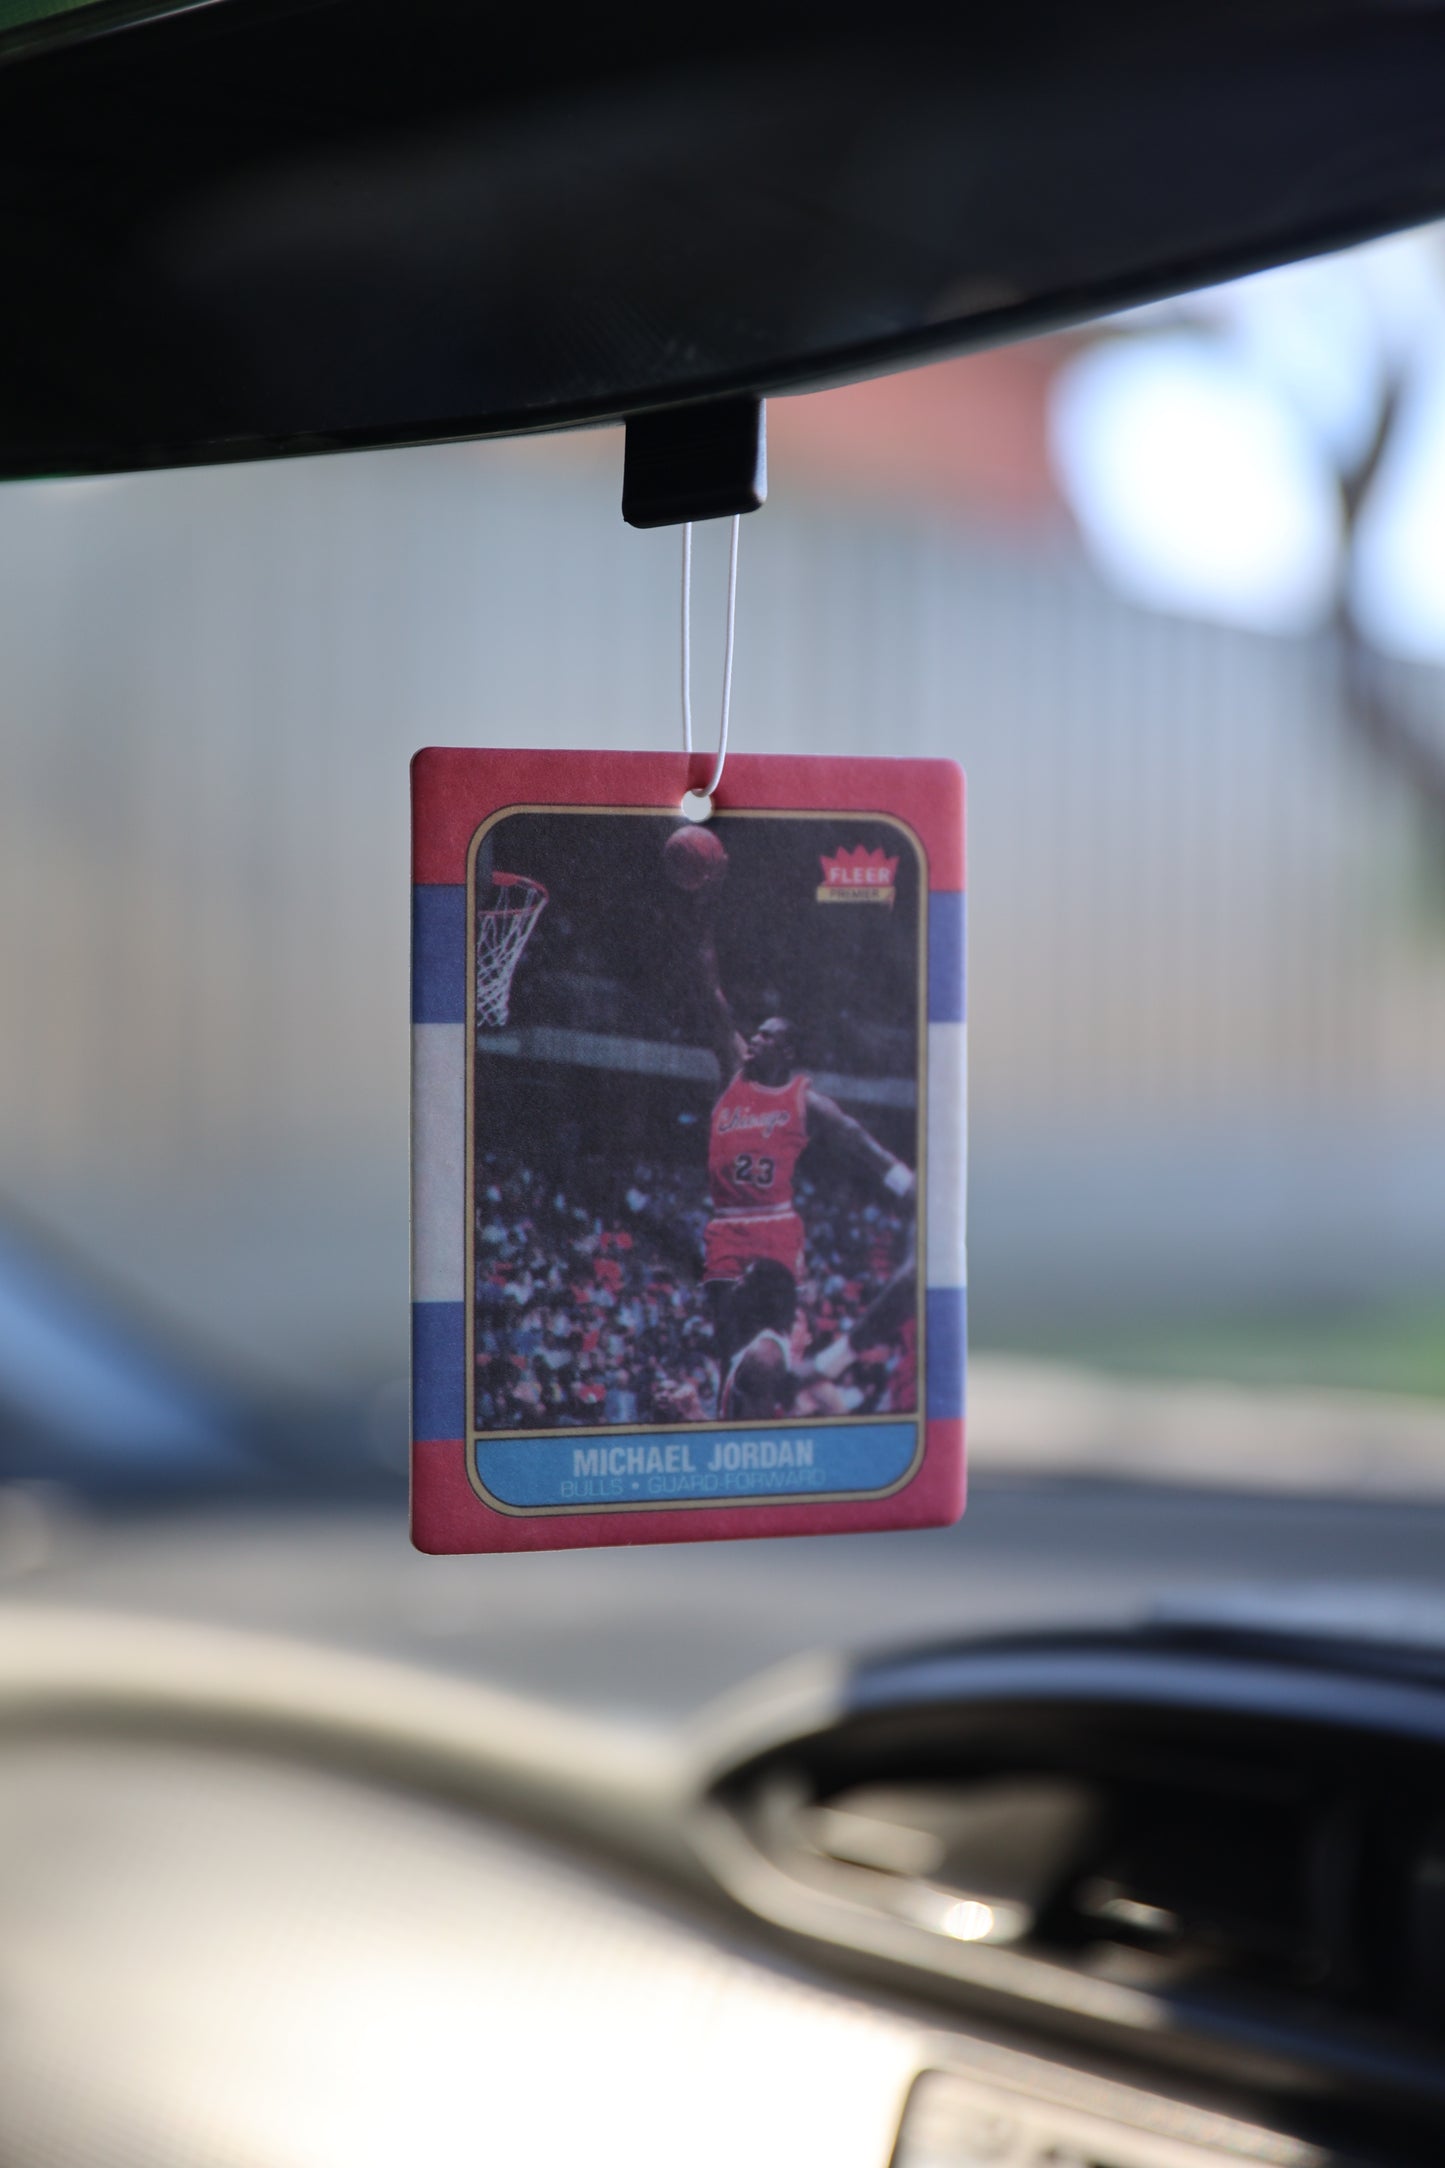 Jordan Basketball Card Air Freshener